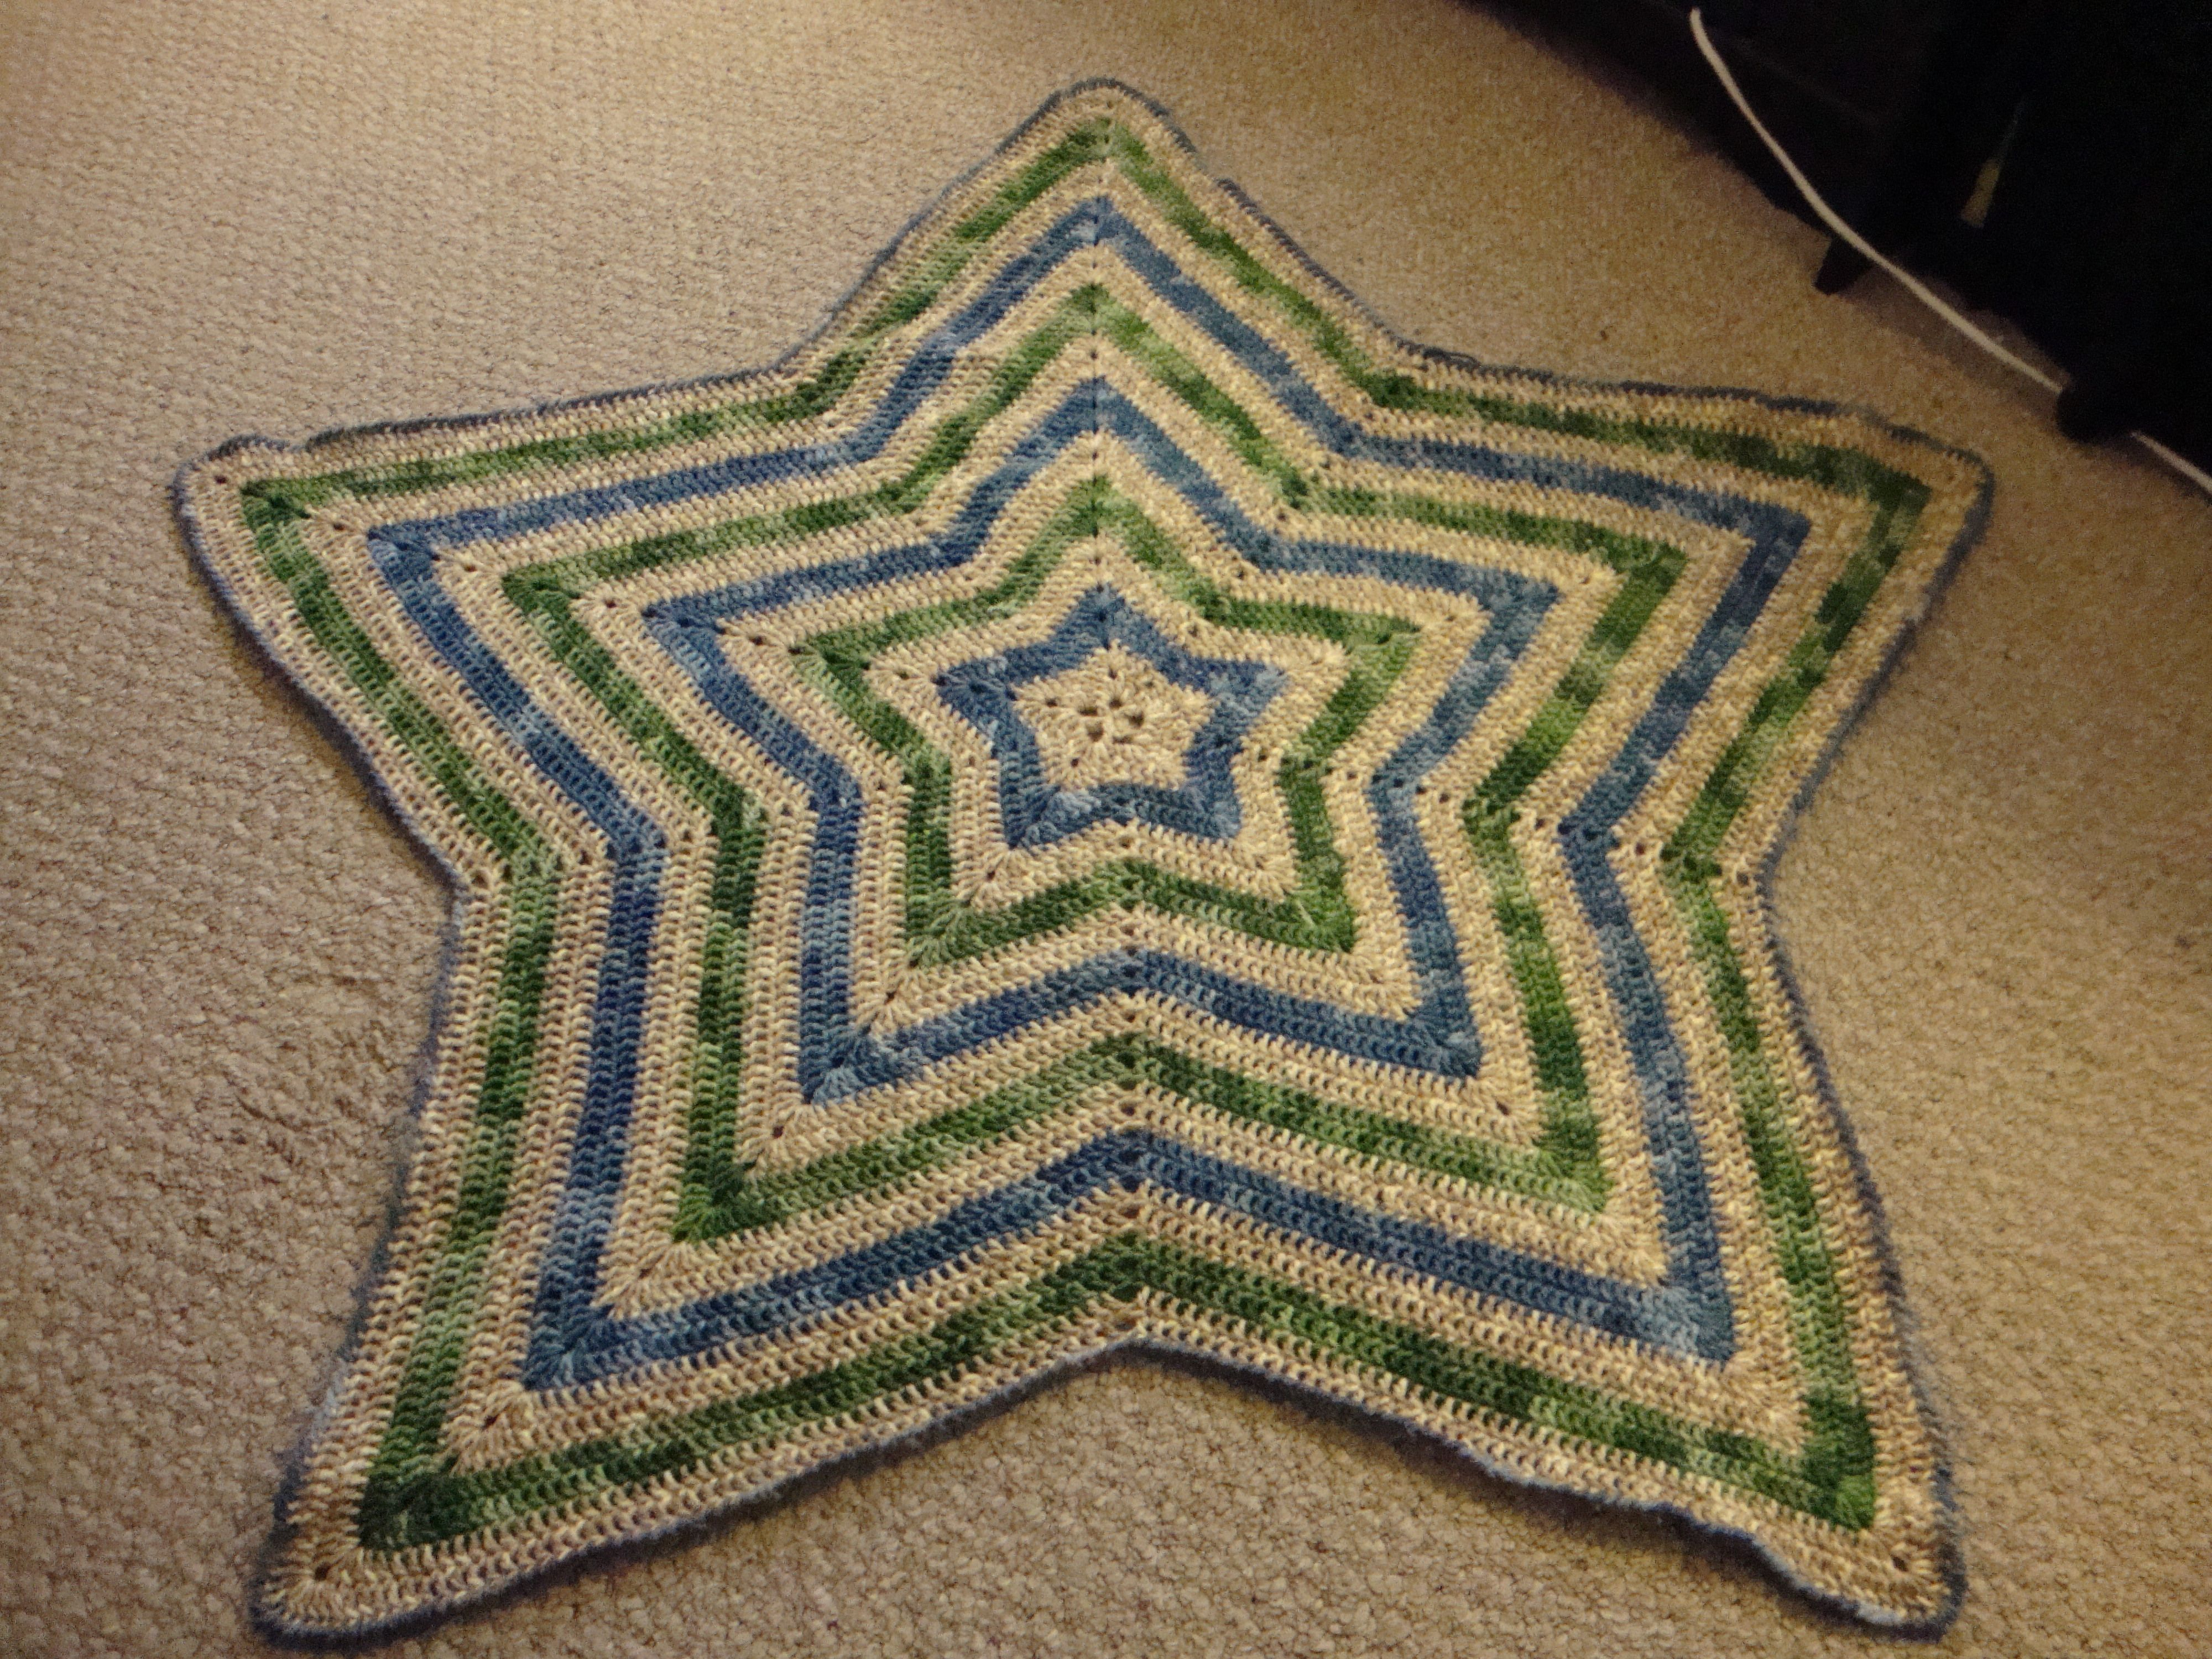 Star Shaped Crochet Blanket Pattern Star Shaped Crochet Blanket Pattern Can Be Found On Bernat